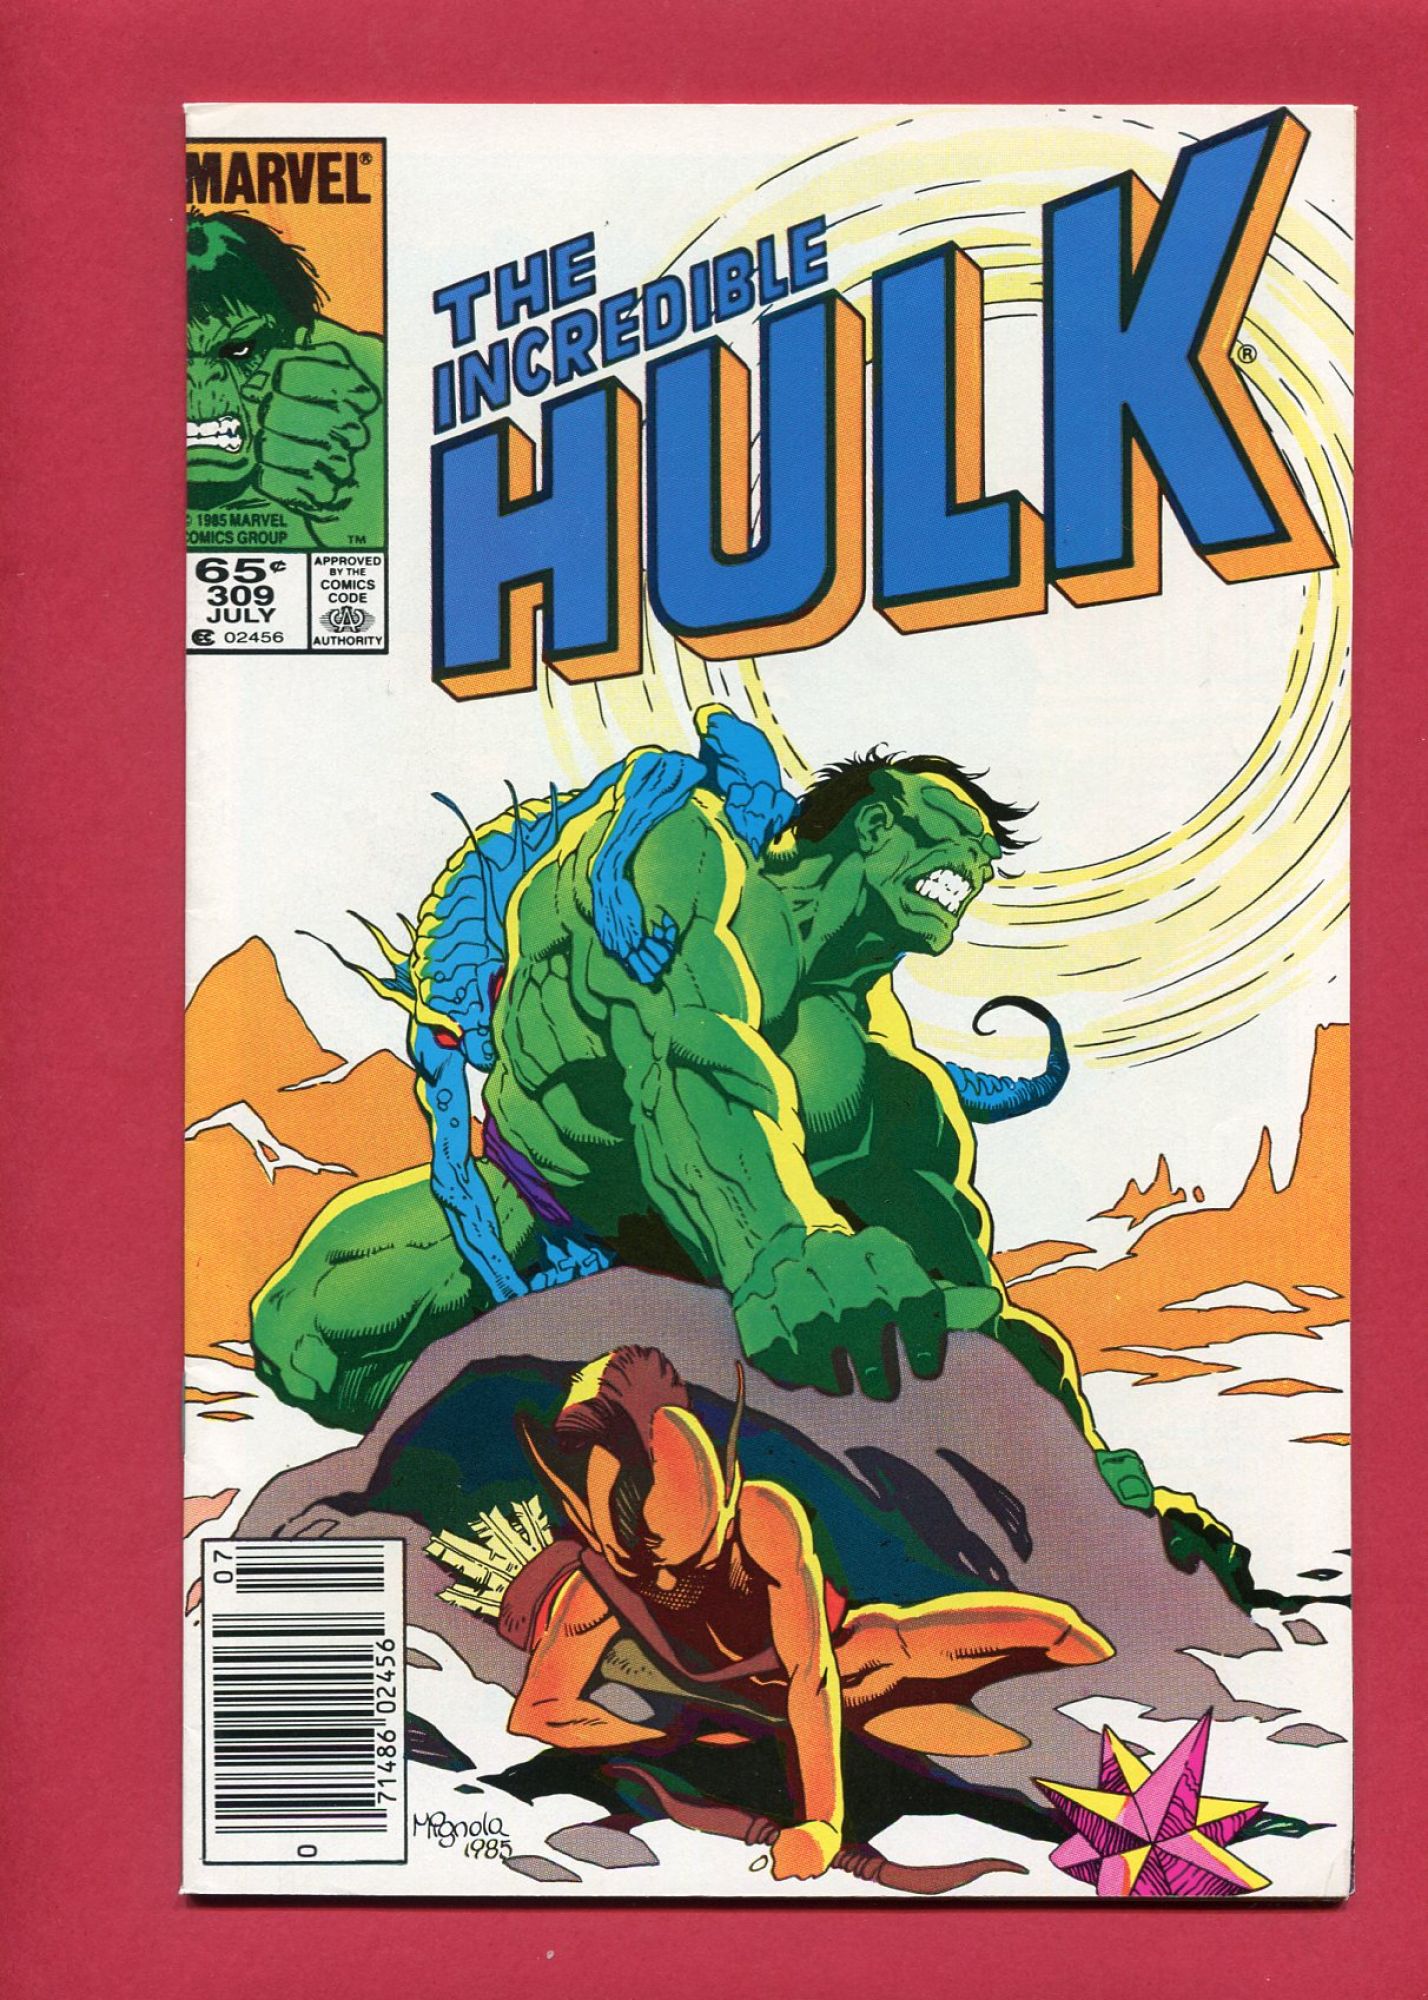 Incredible Hulk #309, Jul 1985, 7.5 VF-